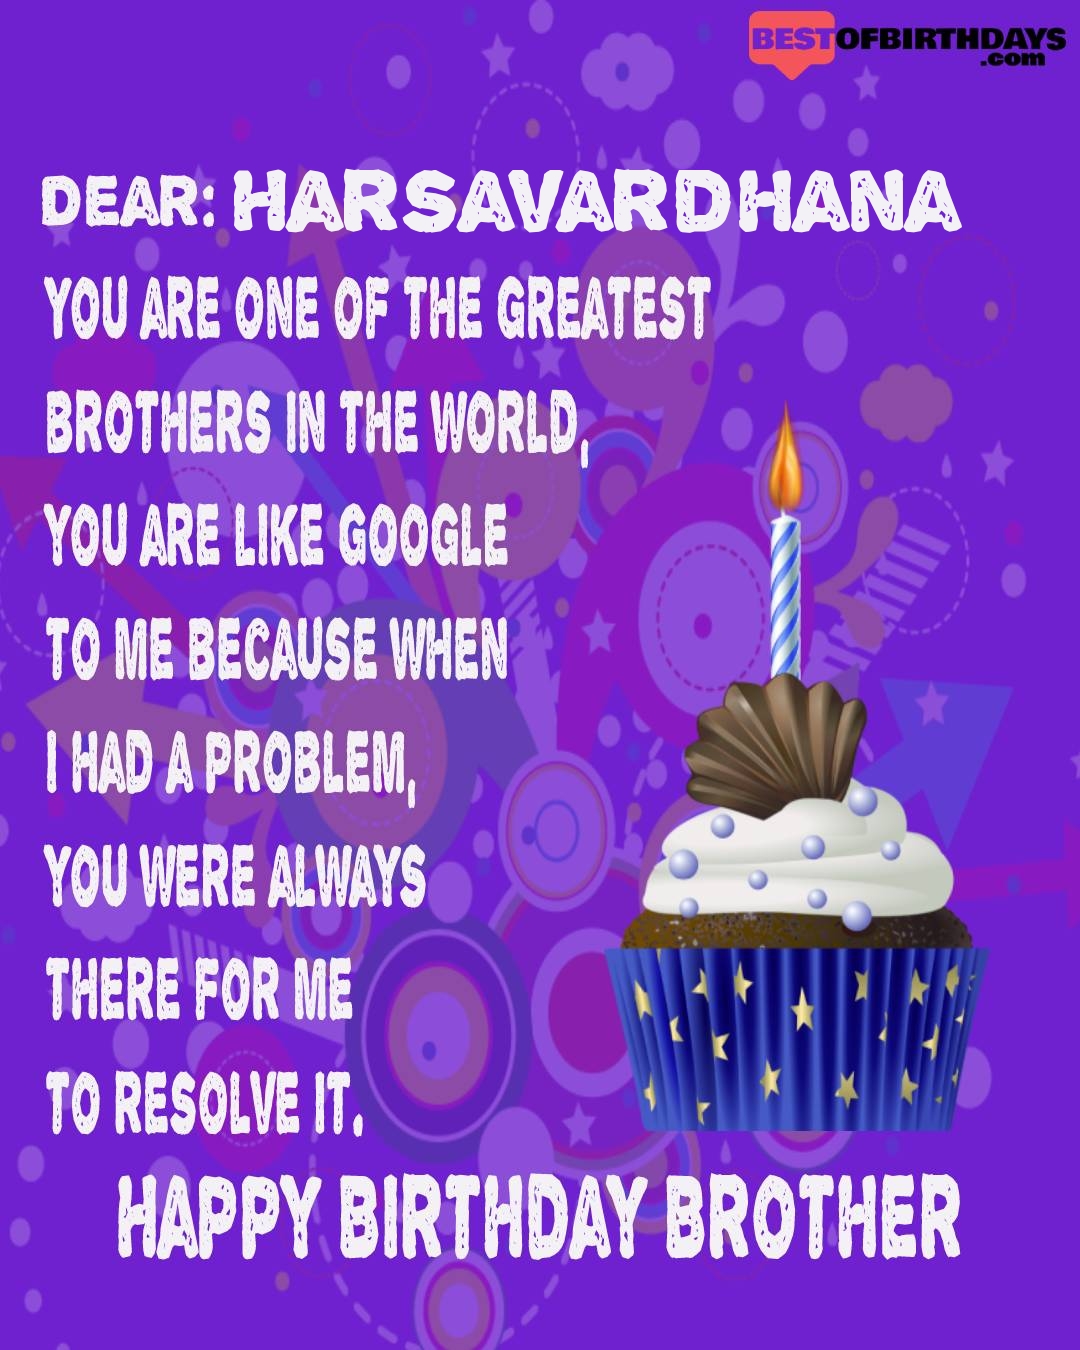 Happy birthday harsavardhana bhai brother bro